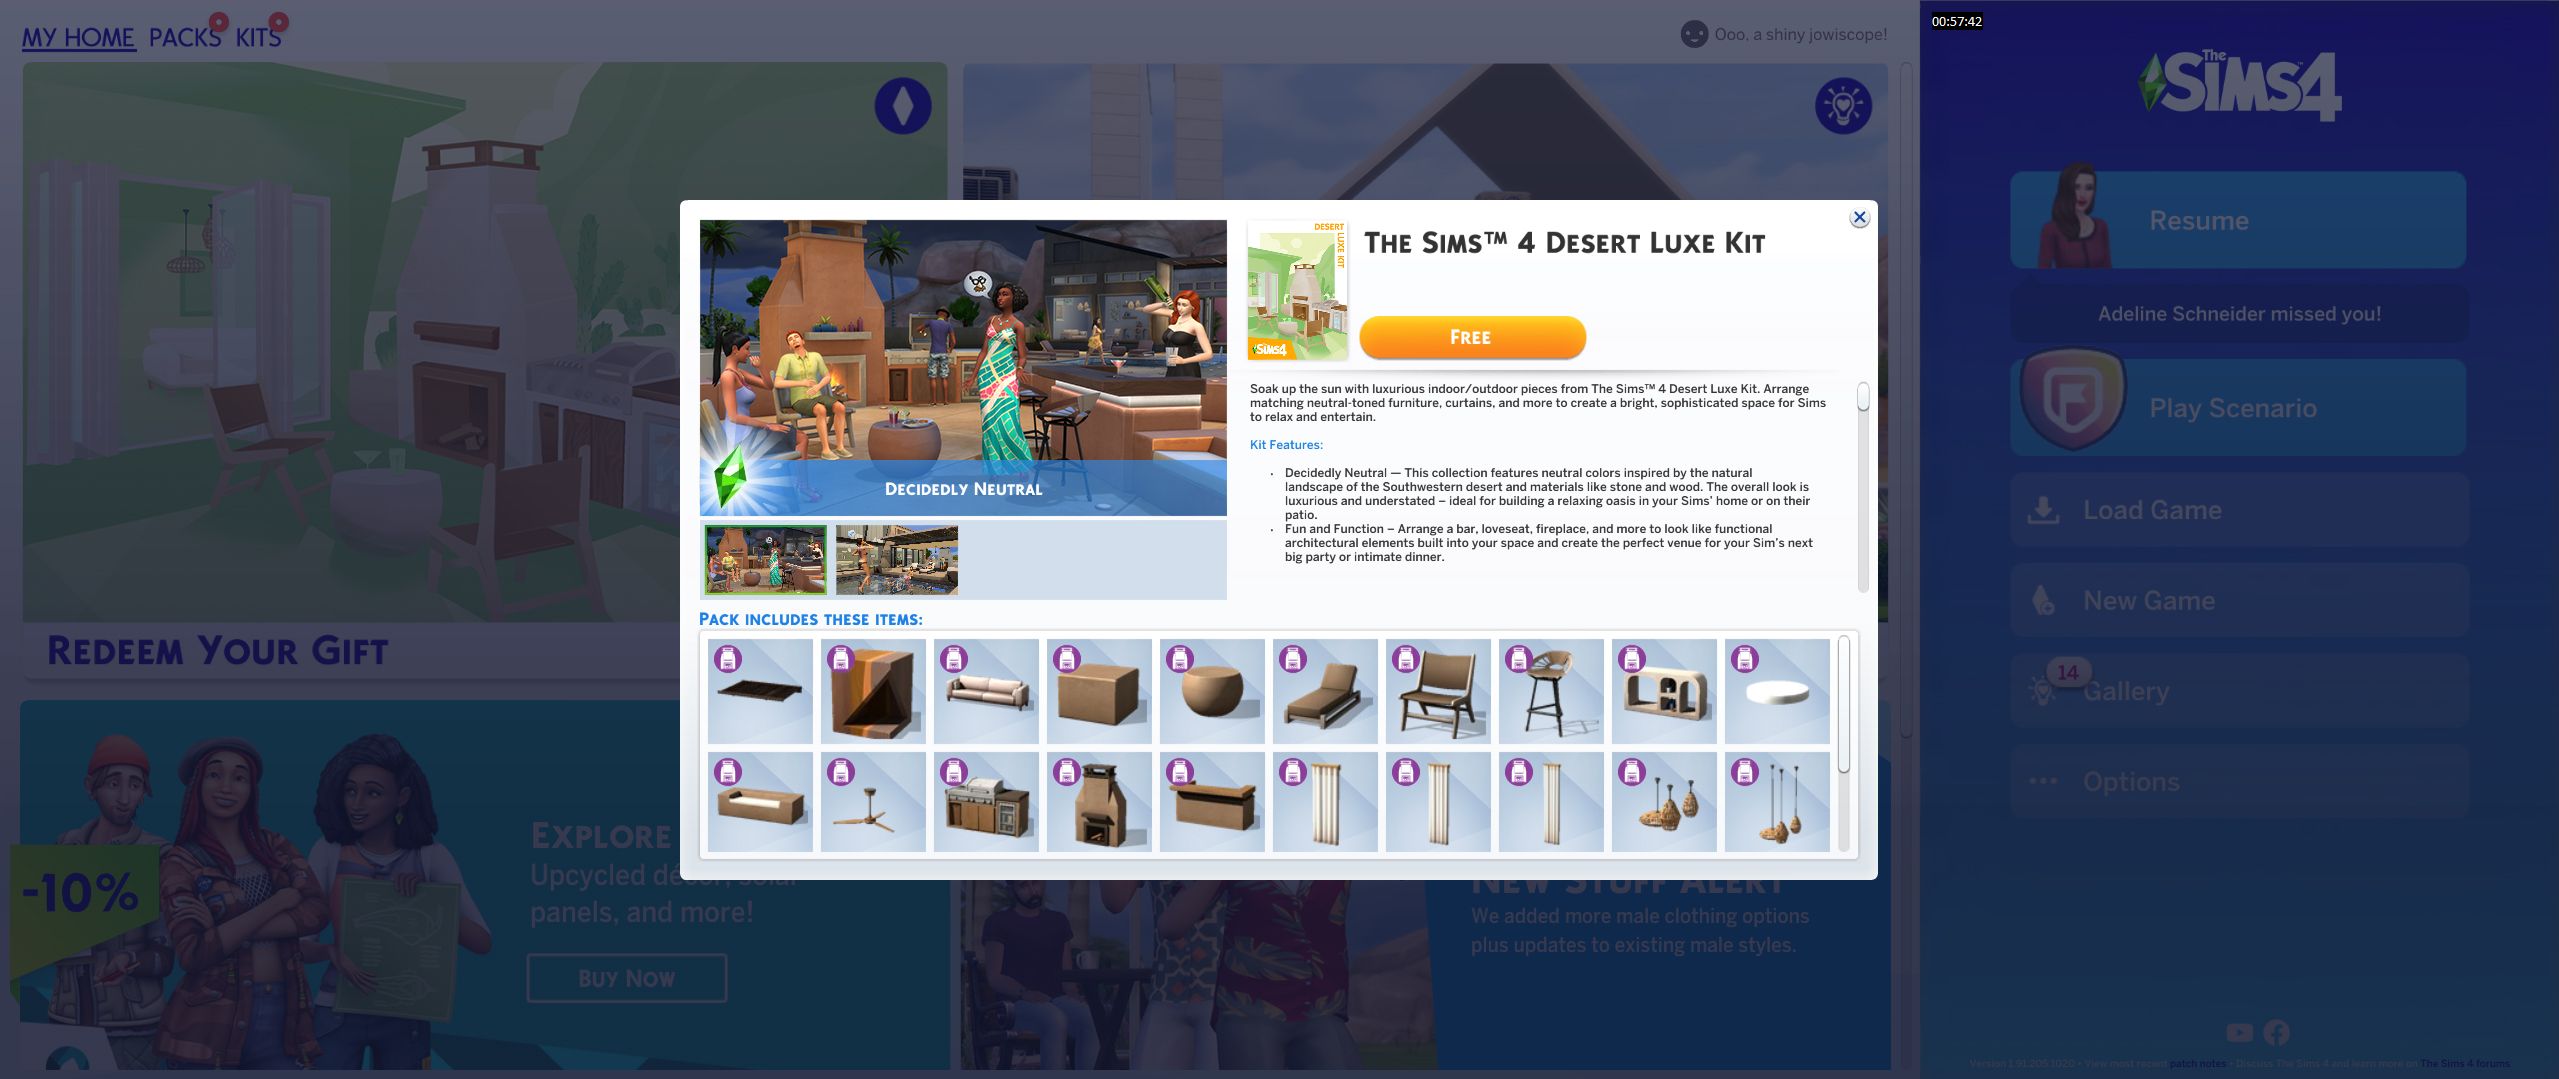 Claim The Sims 4 Desert Luxe Kit